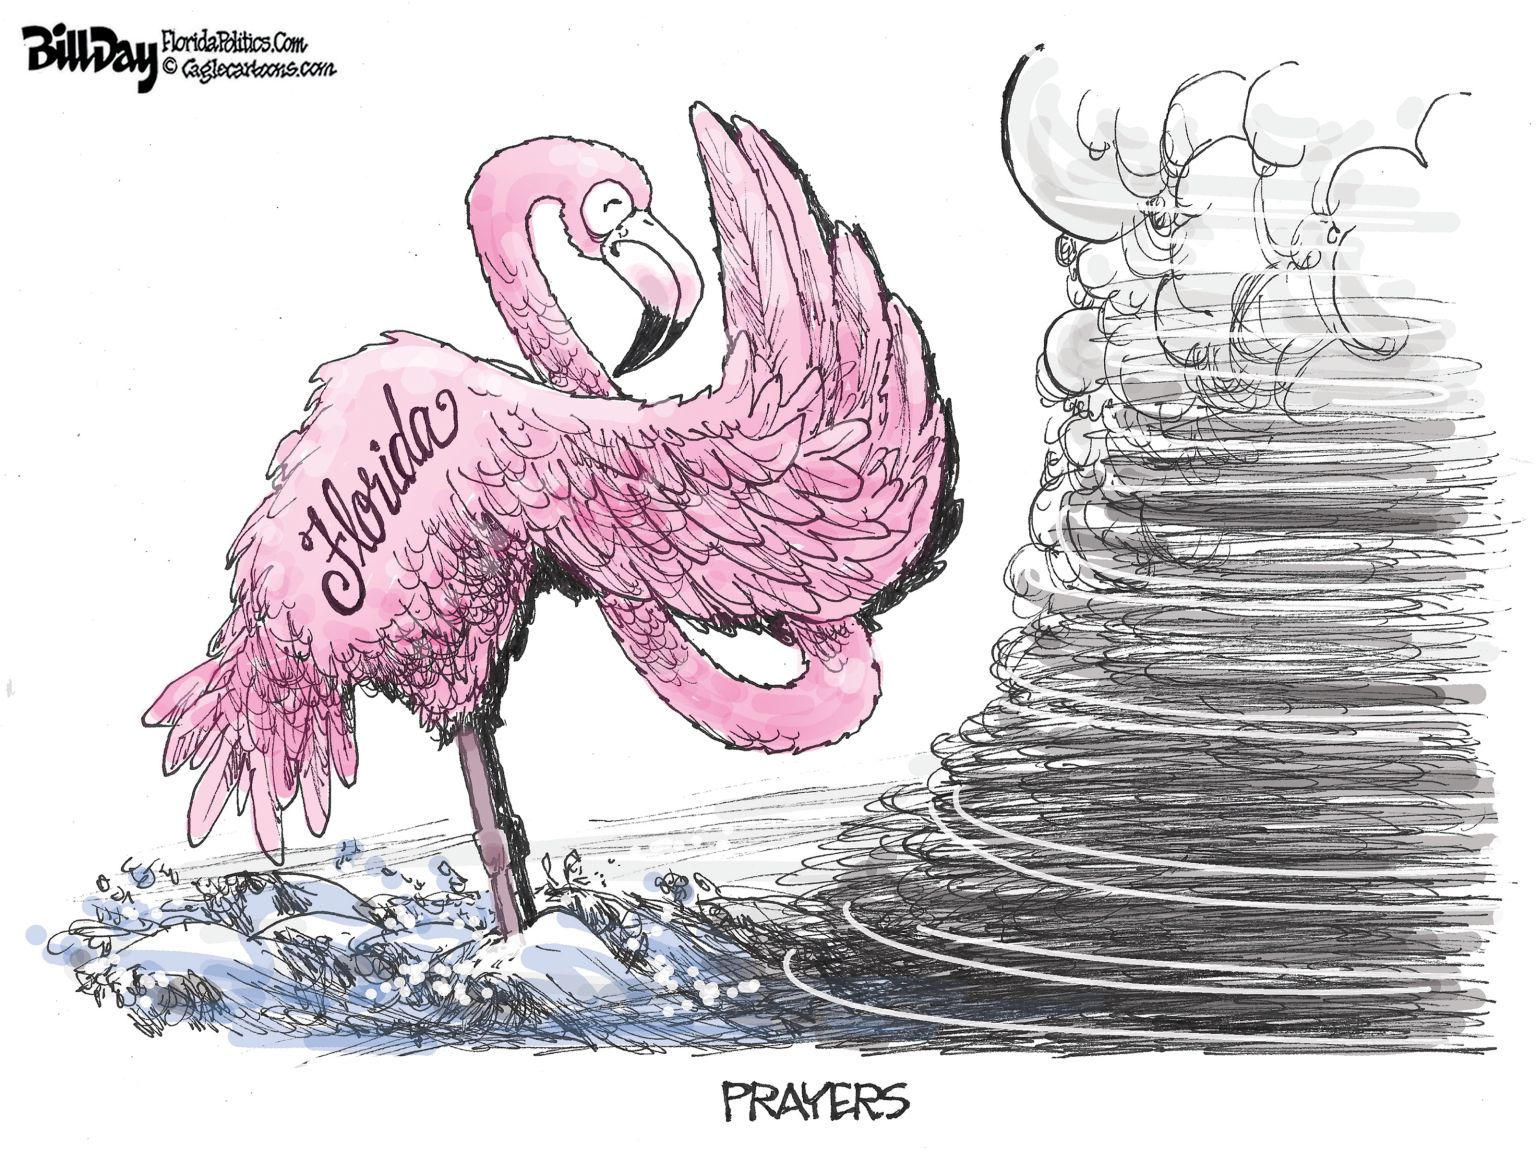 Florida Hurricane Ian - newsjustin.press - editorial cartoon